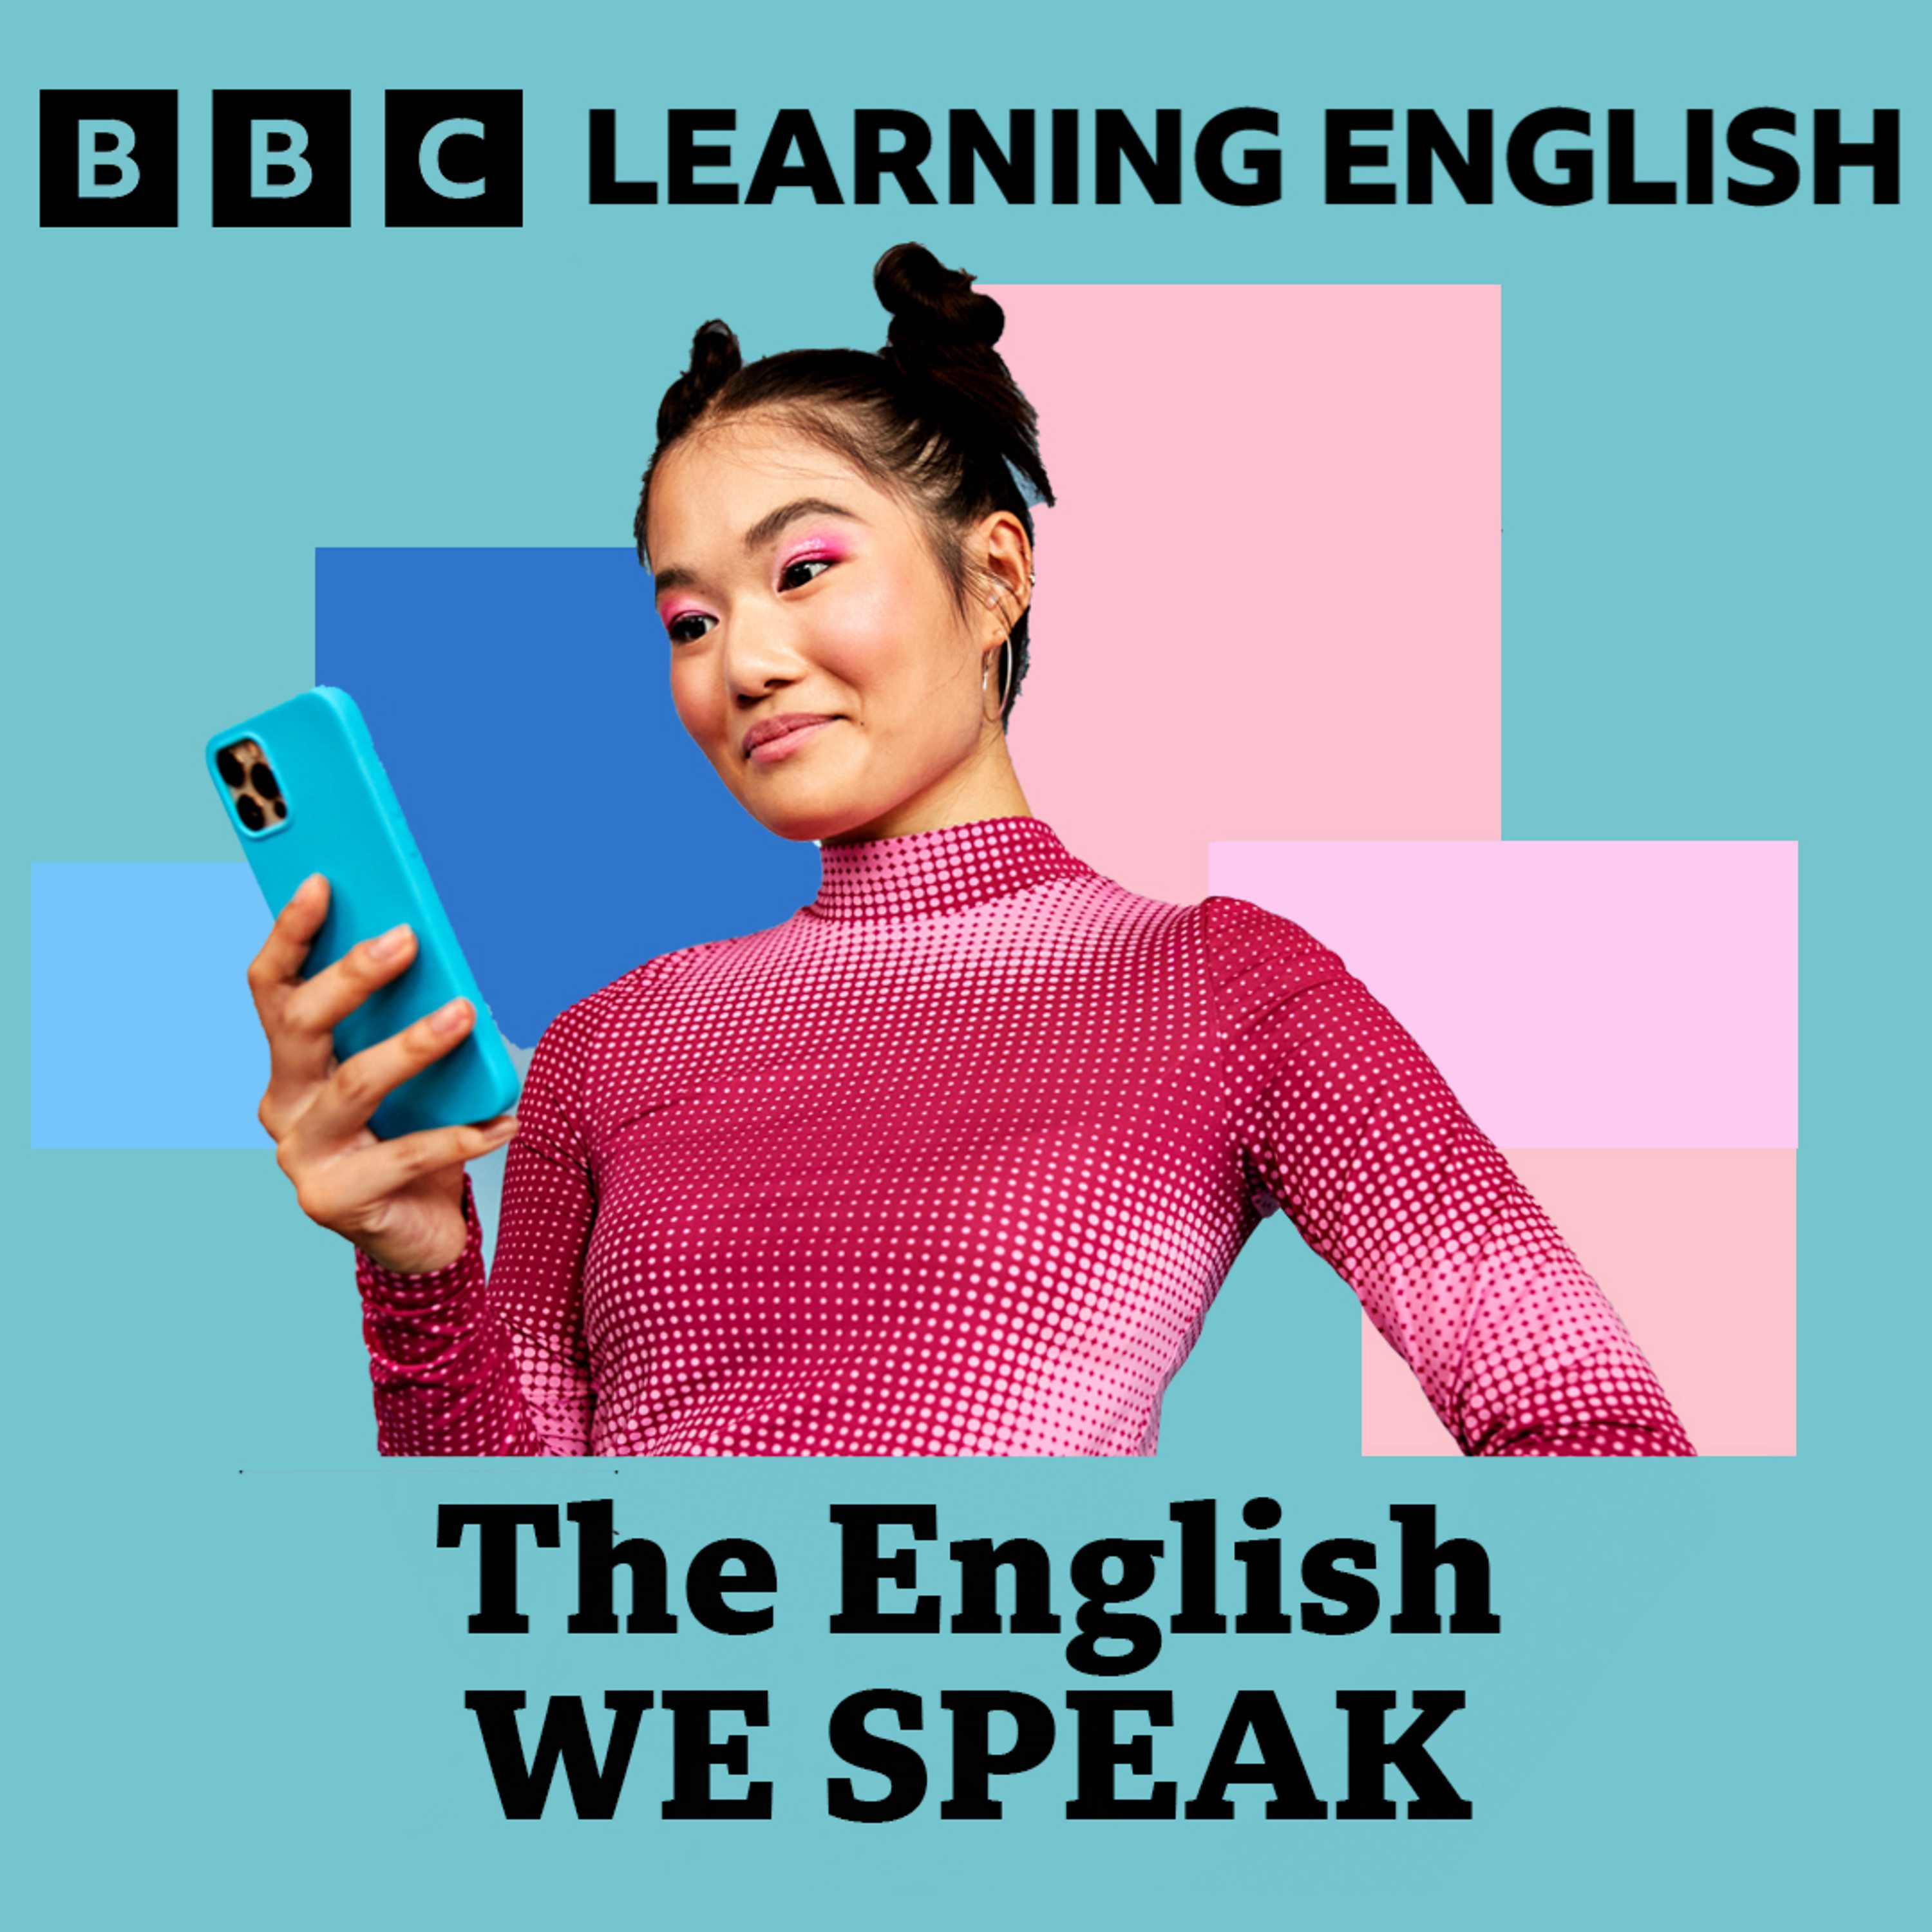 The English we speak: Take the plunge